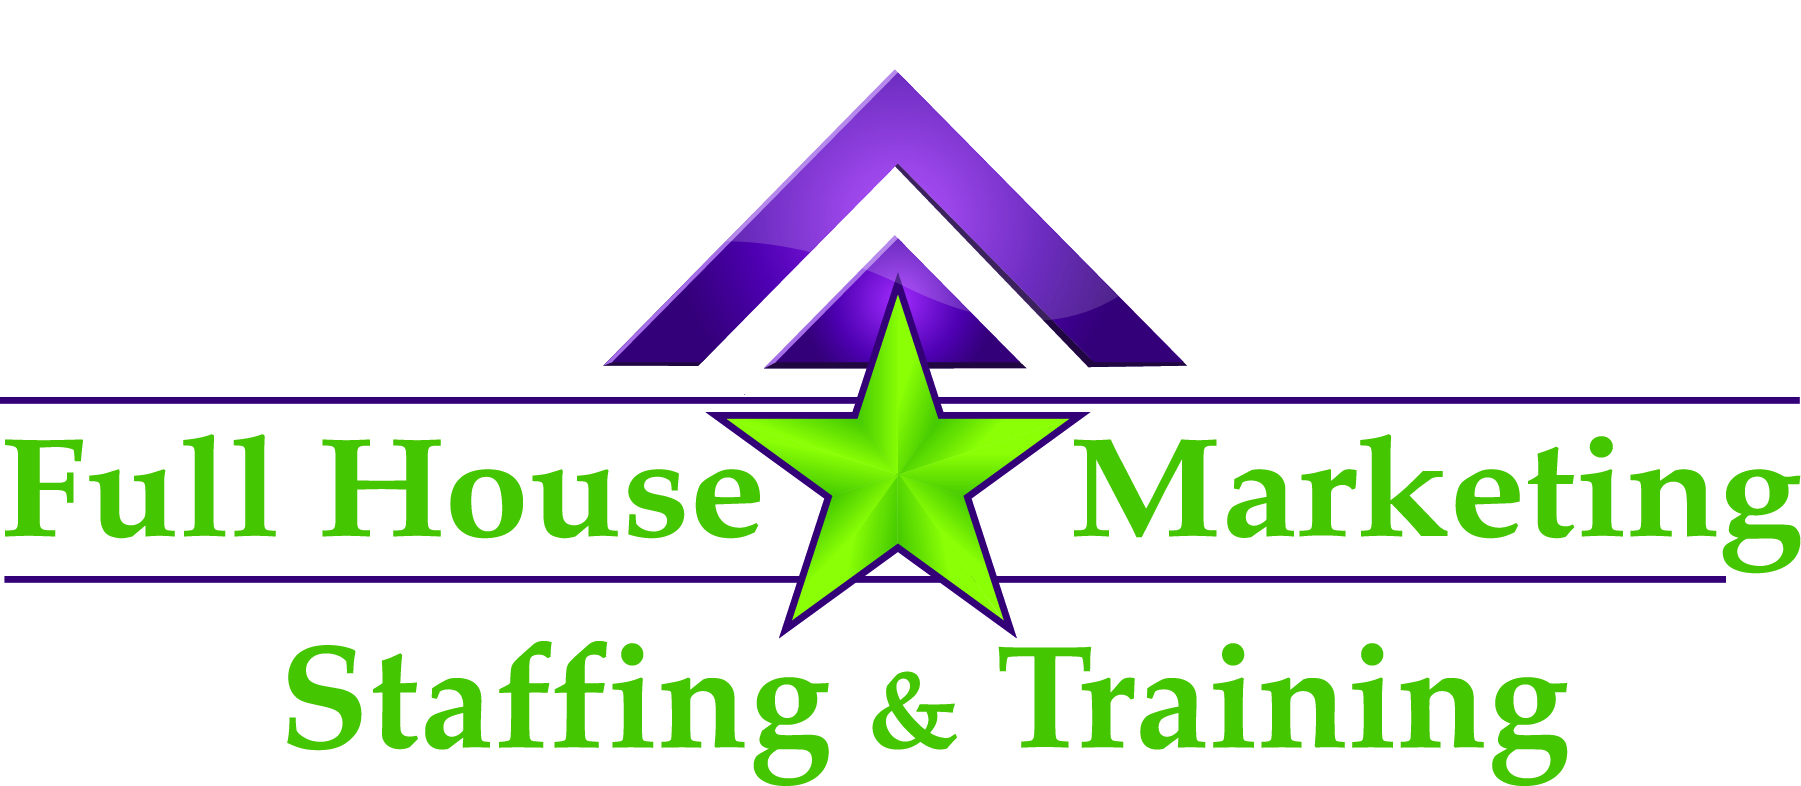 full house marketing logo